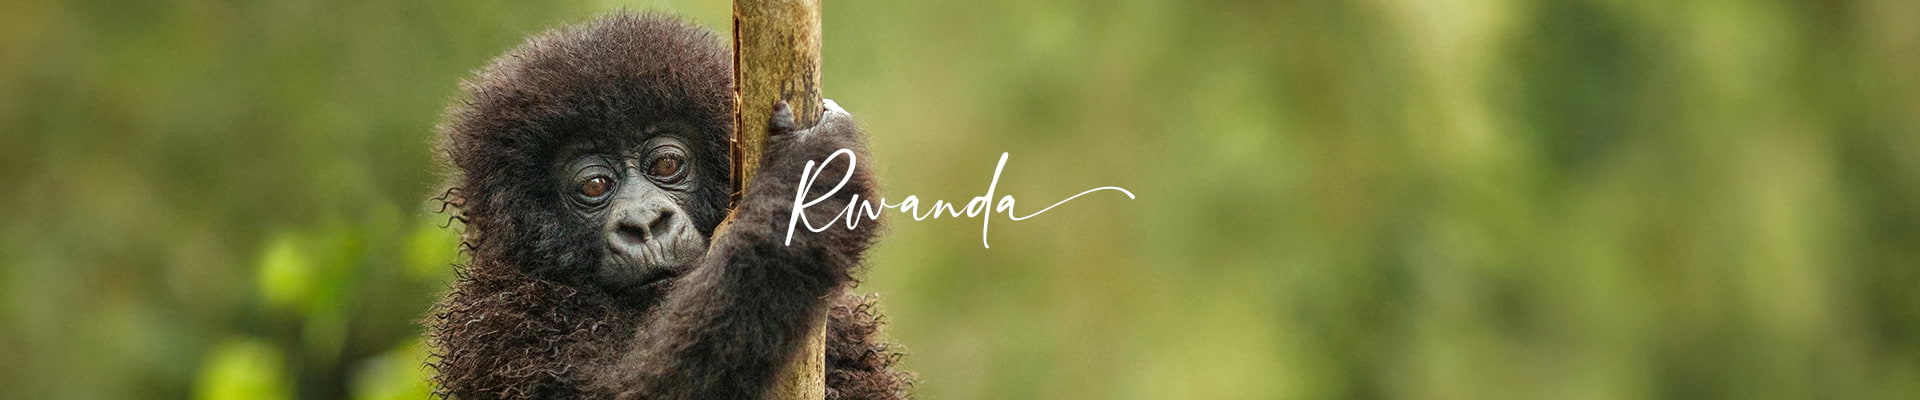 images/panos/desktop/rwanda